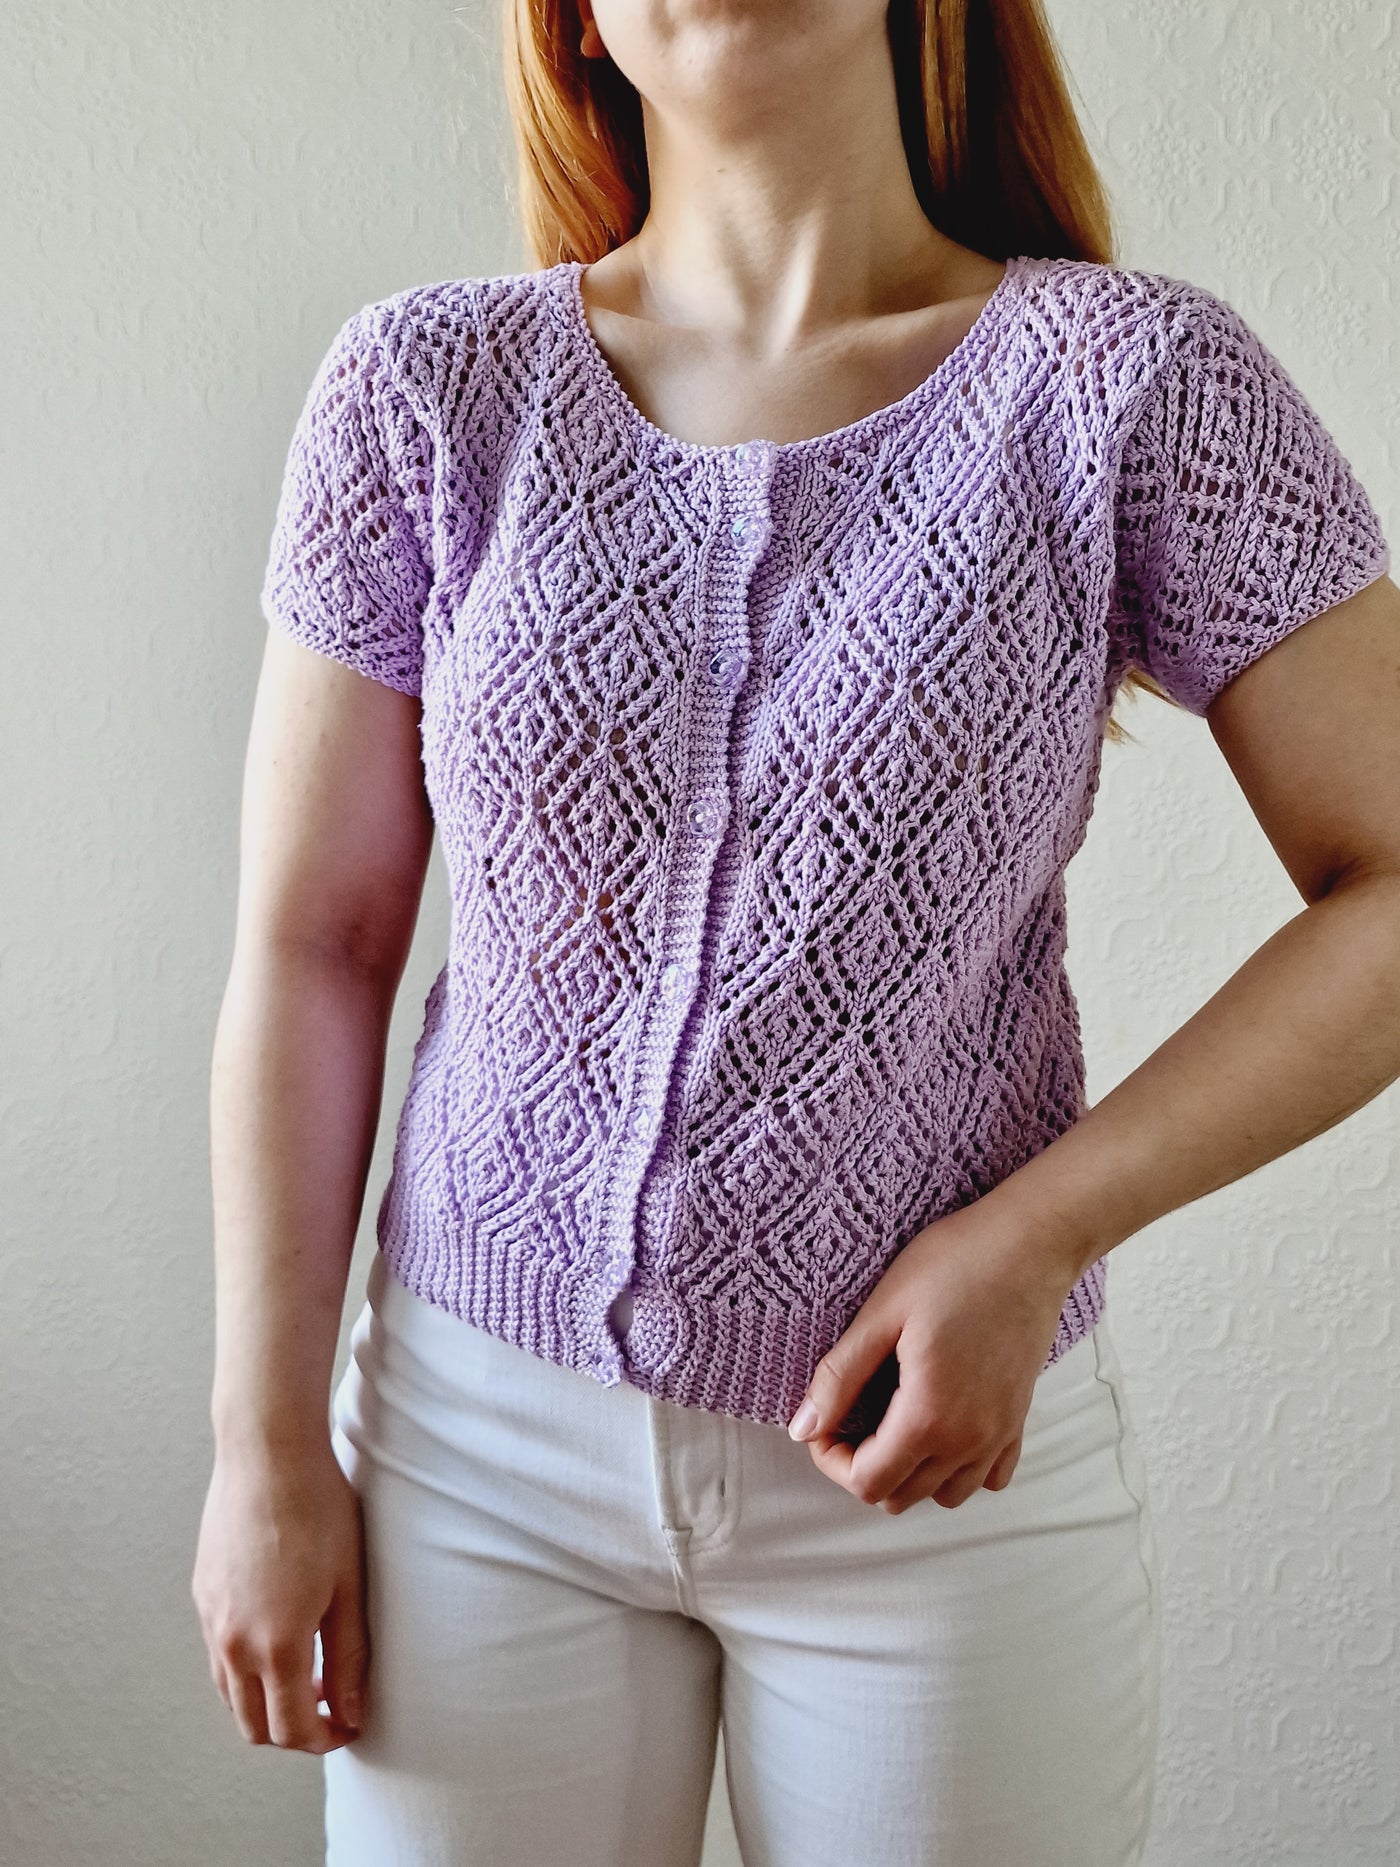 Vintage 80s Mauve Purple Crochet Jumper Top with Short Sleeves - XS